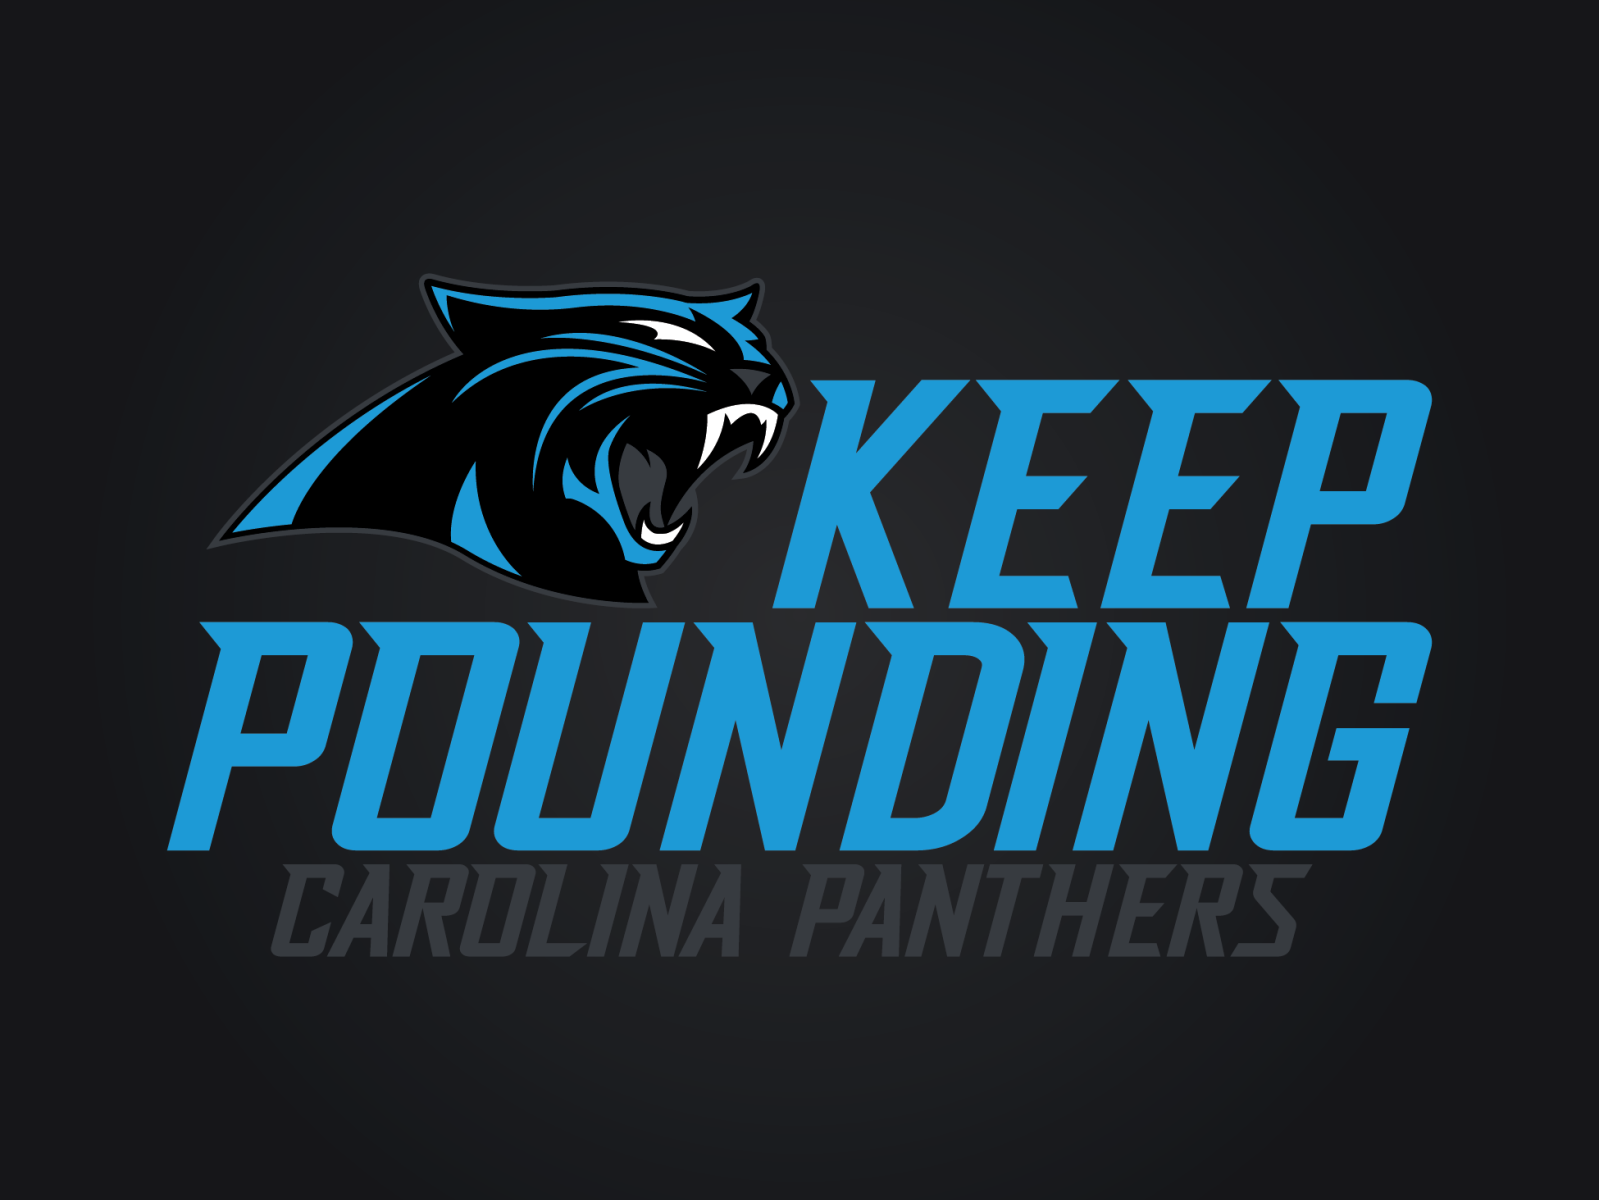 Carolina Panthers by Luke Orient on Dribbble